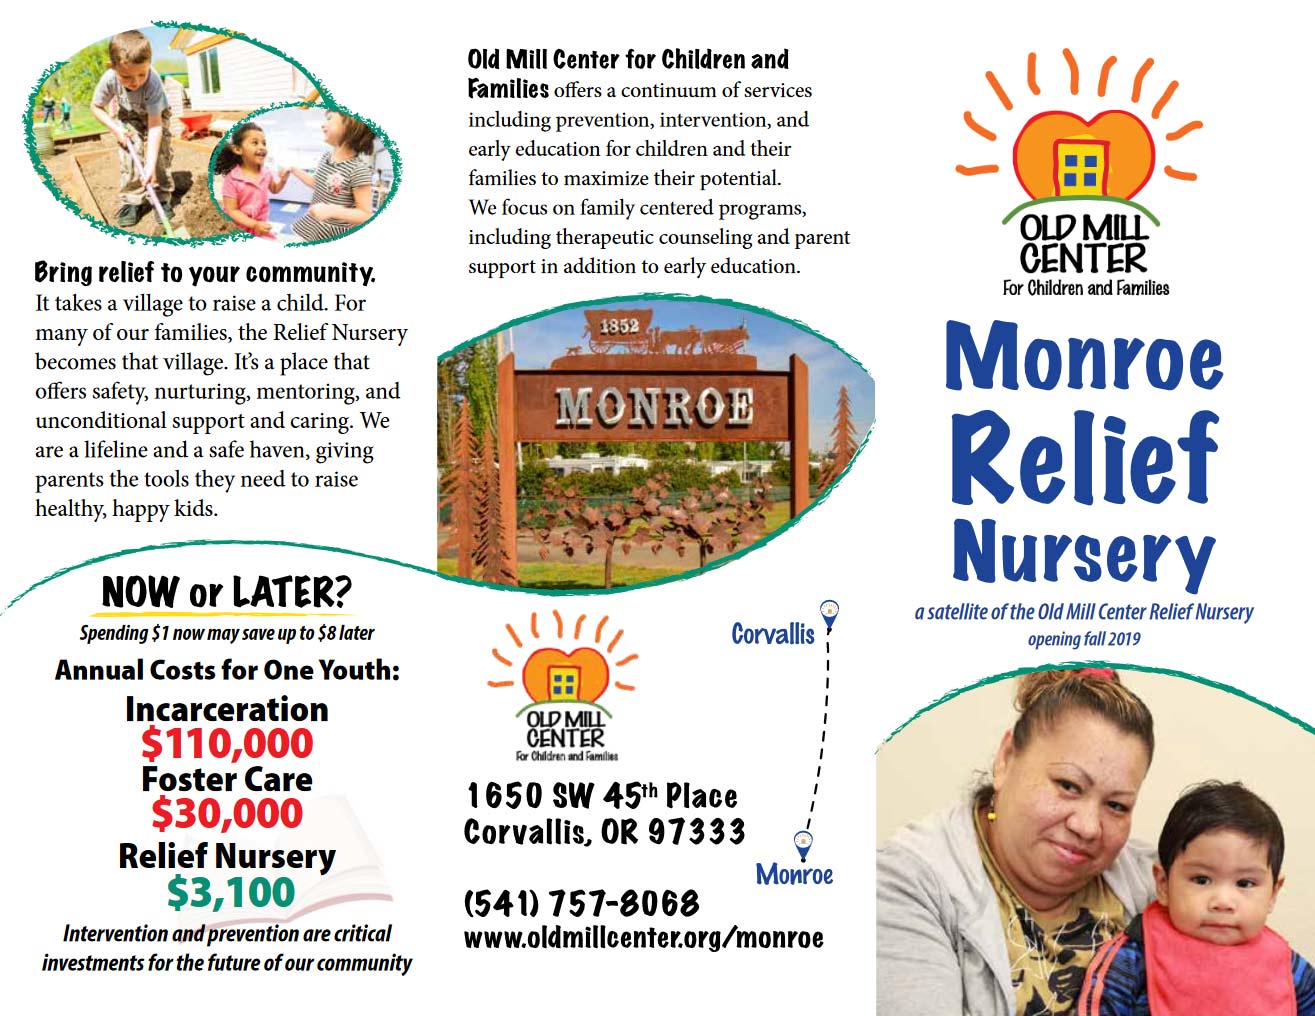 Monroe Relief Nursery